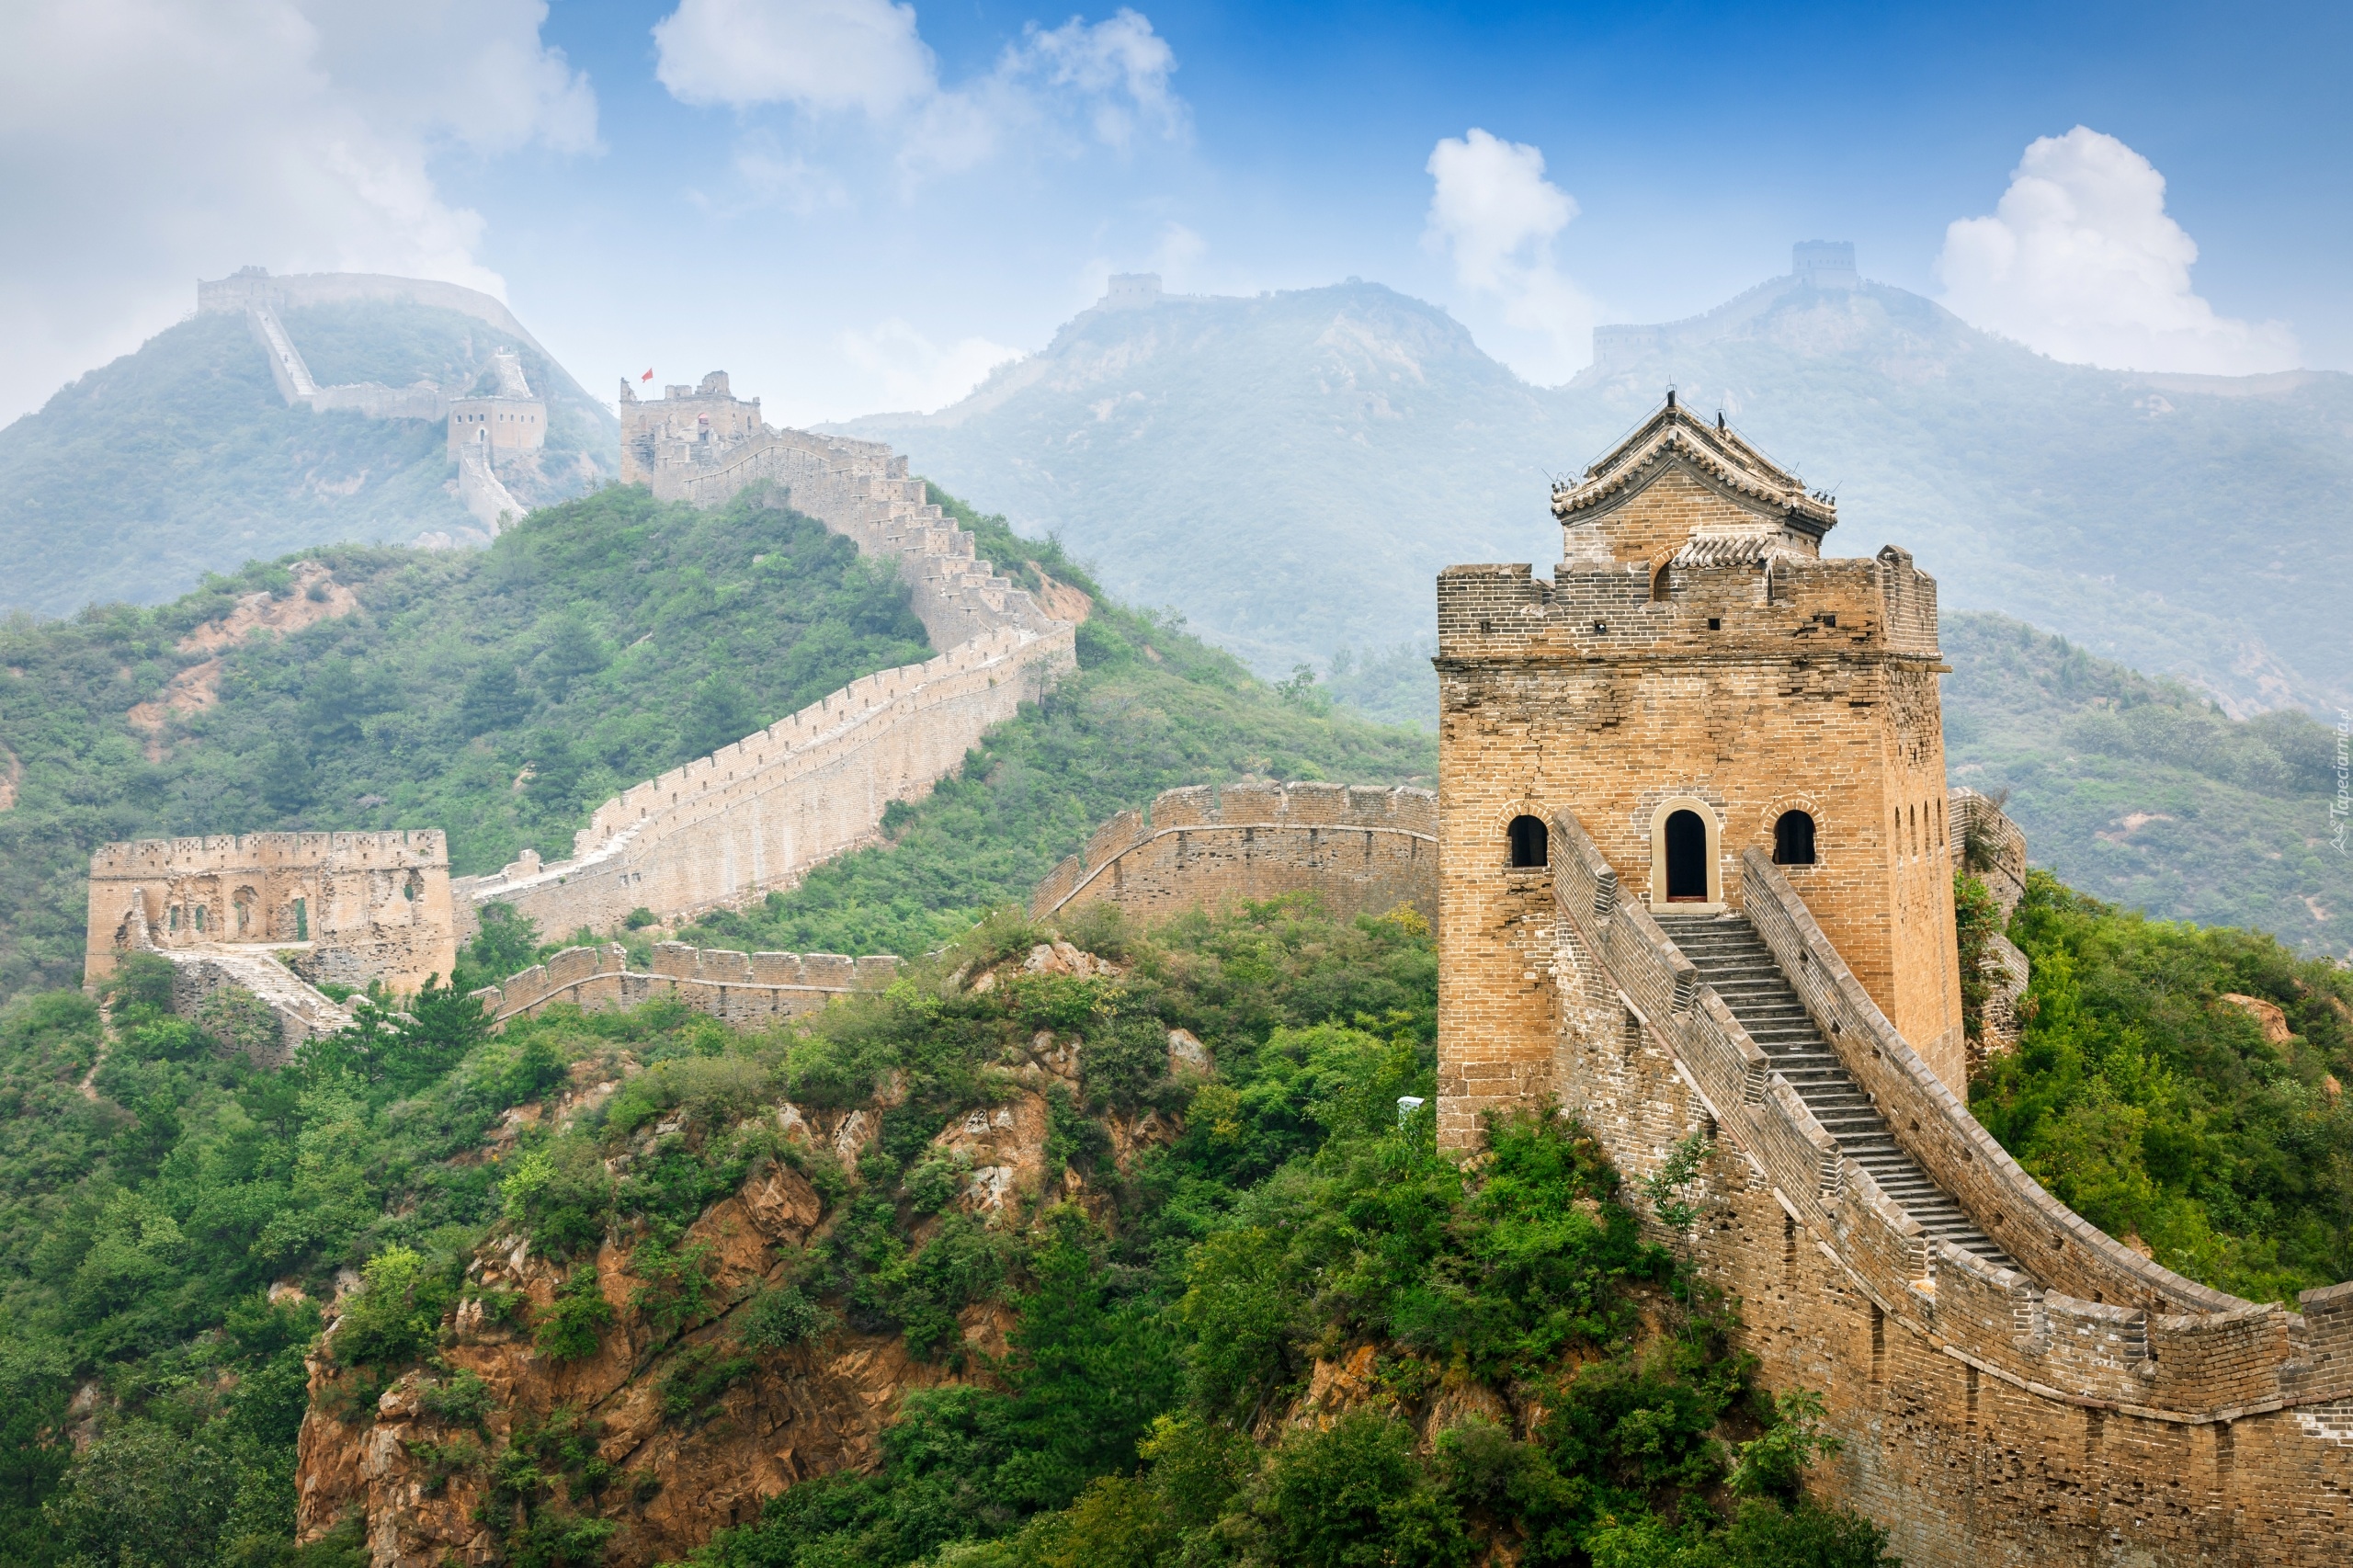  Chiny, Wielki Mur Chiński, Zabytek, Góry Nan Shan, Mgła